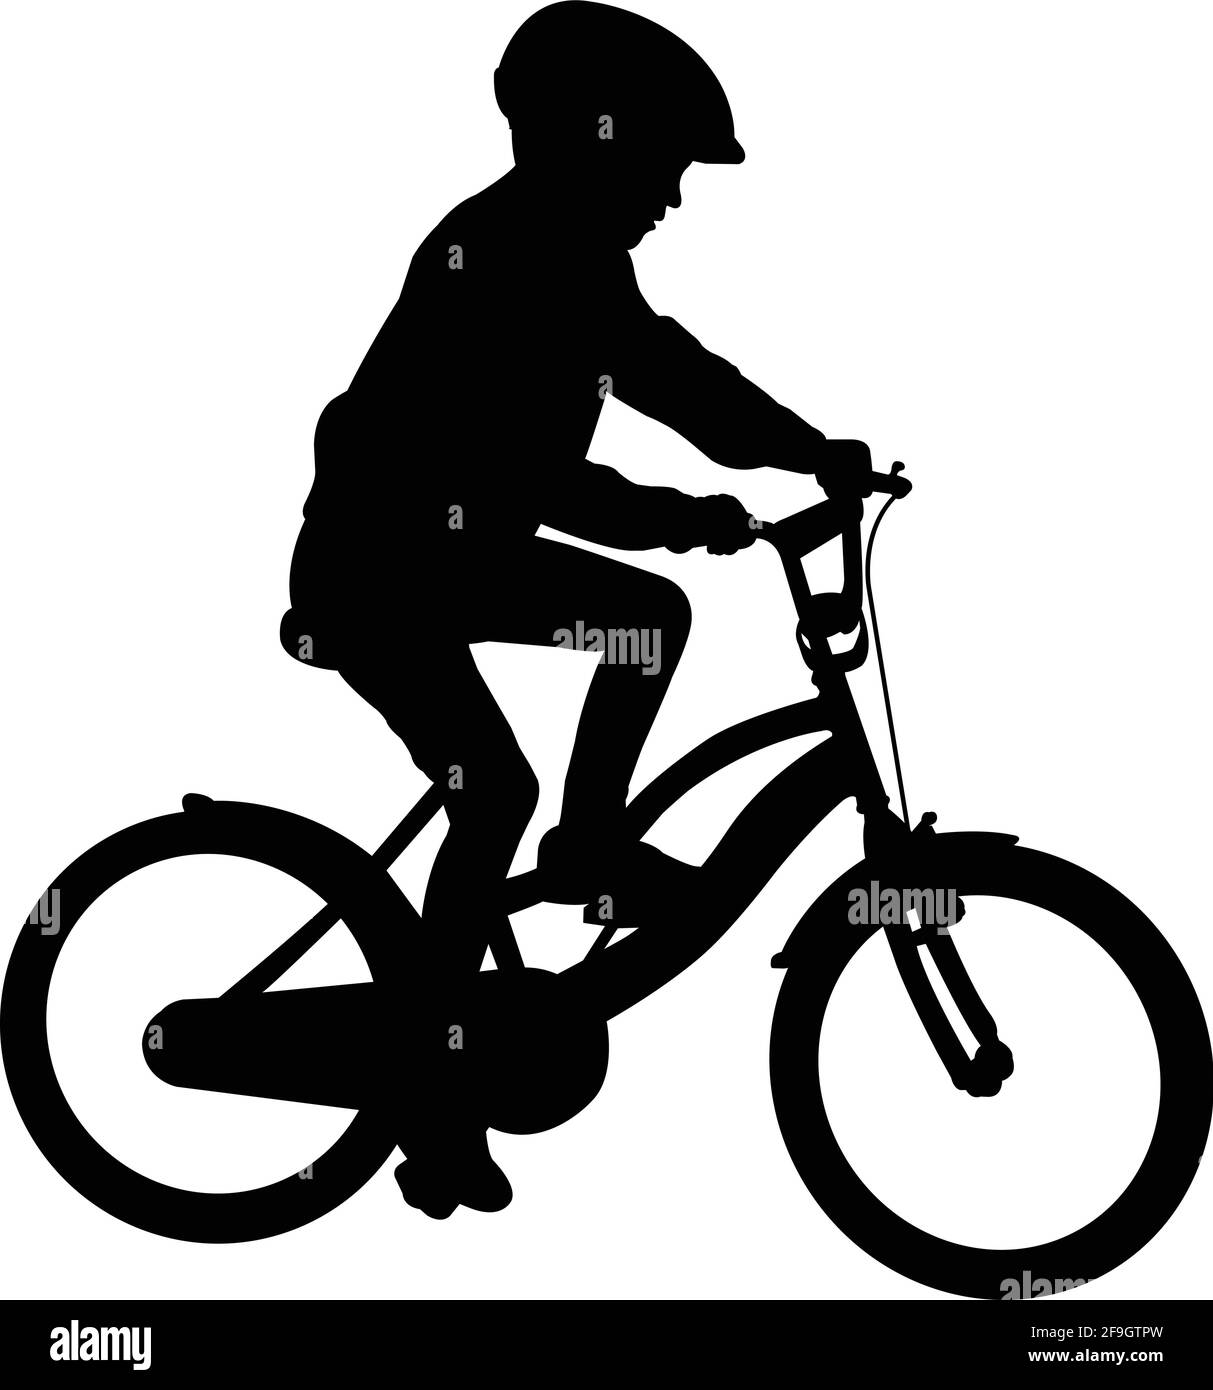 school child bicyclist silhouette - vector Stock Vector